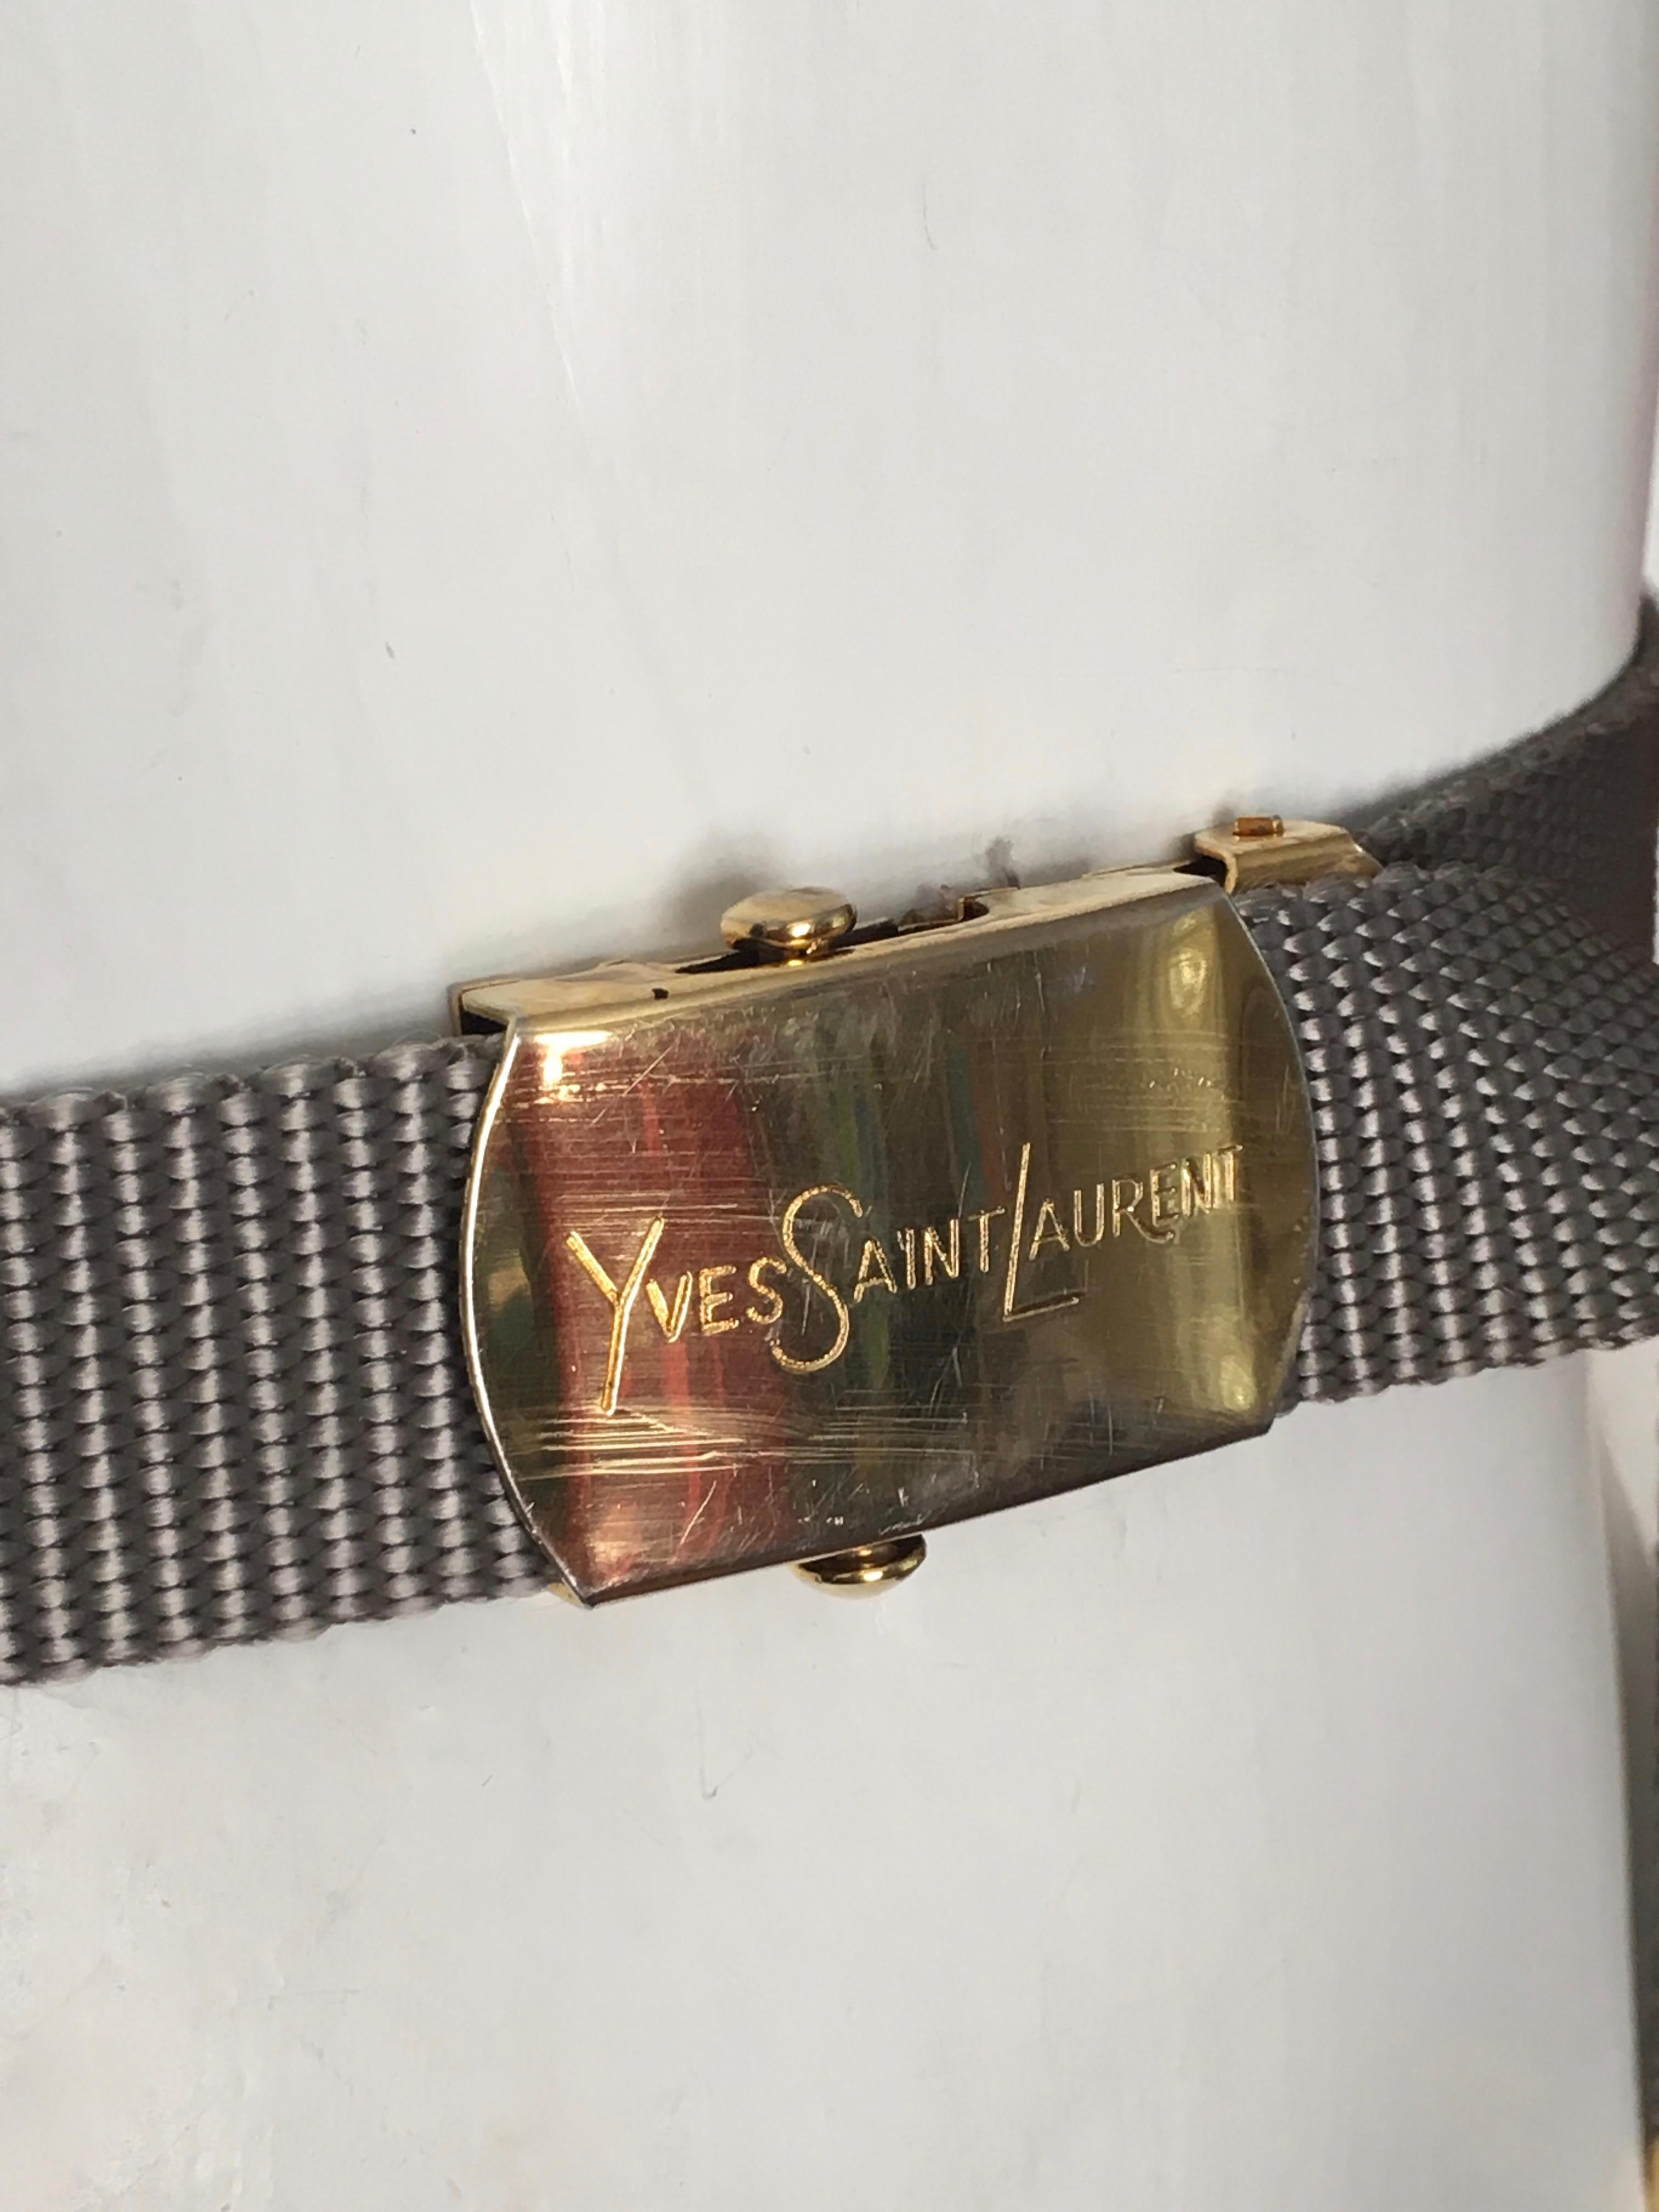 Black Yves Saint Laurent 1980s Nylon Adjustable Belt Size Small.